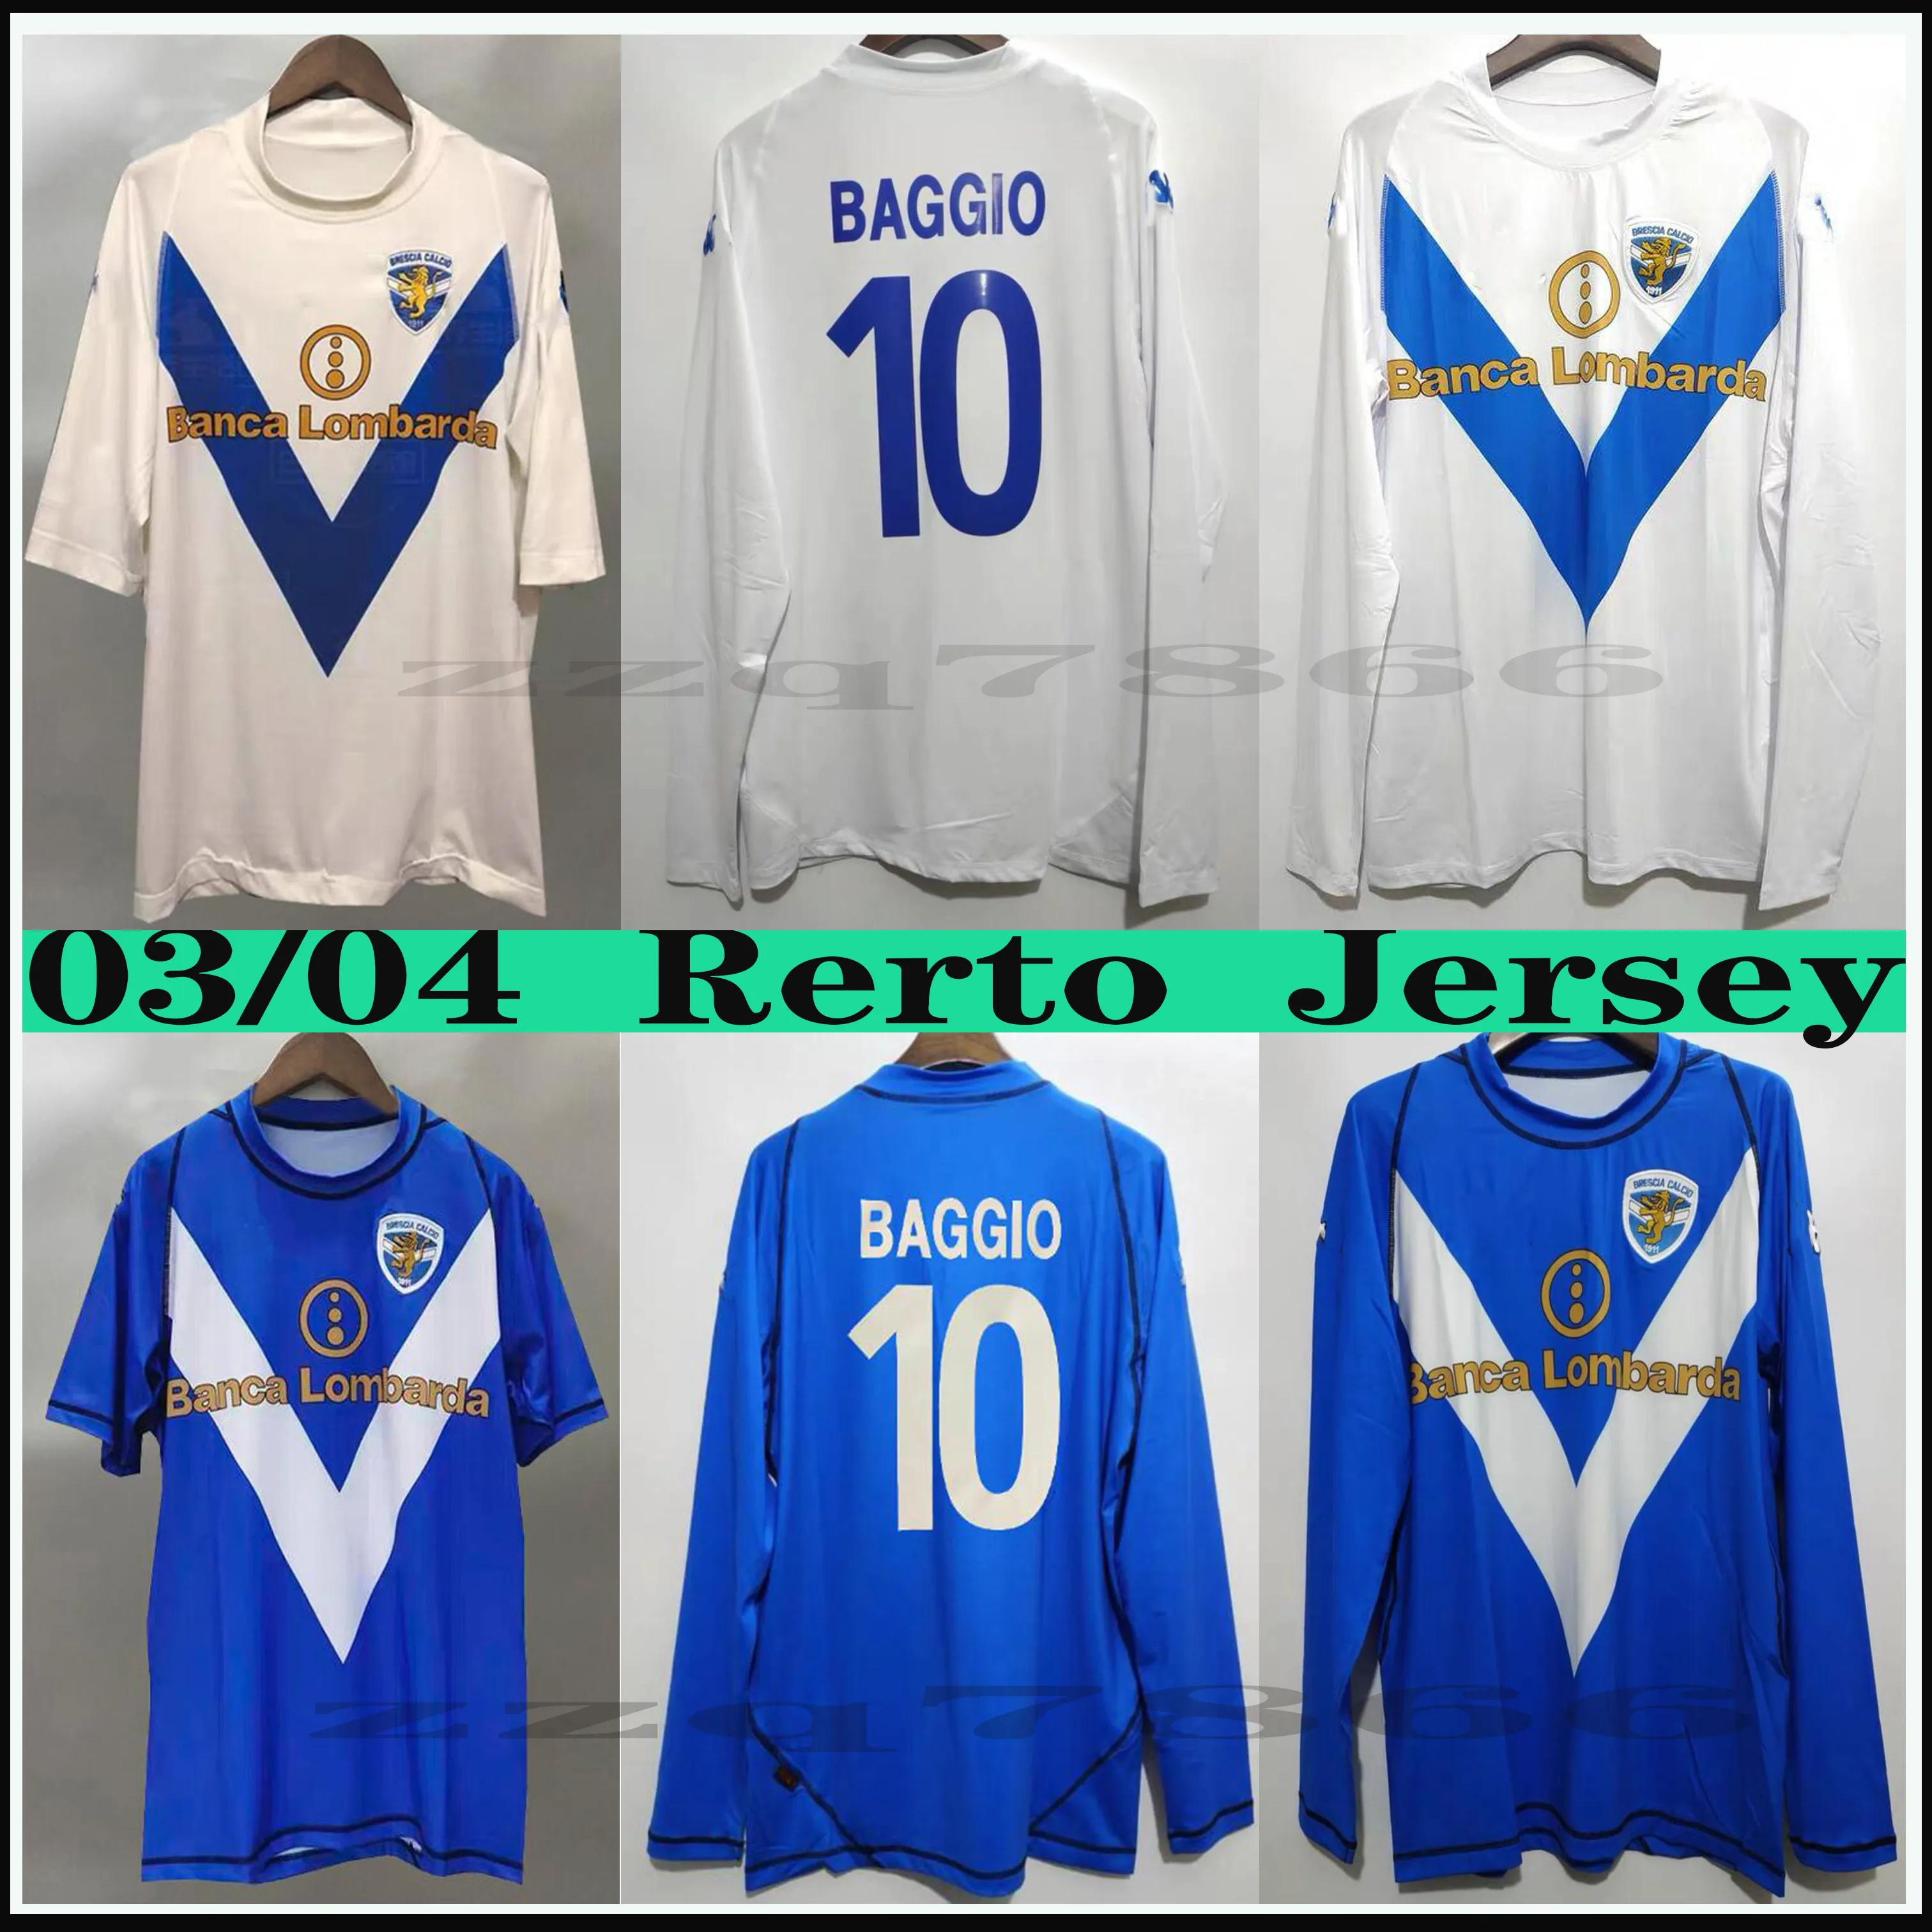 2003 2004 Brescia Baggio Pirlo 레트로 축구 유니폼 클래식 빈티지 Calcio F.Aye Donnarumma Spalek 긴 소매 짧은 축구 셔츠